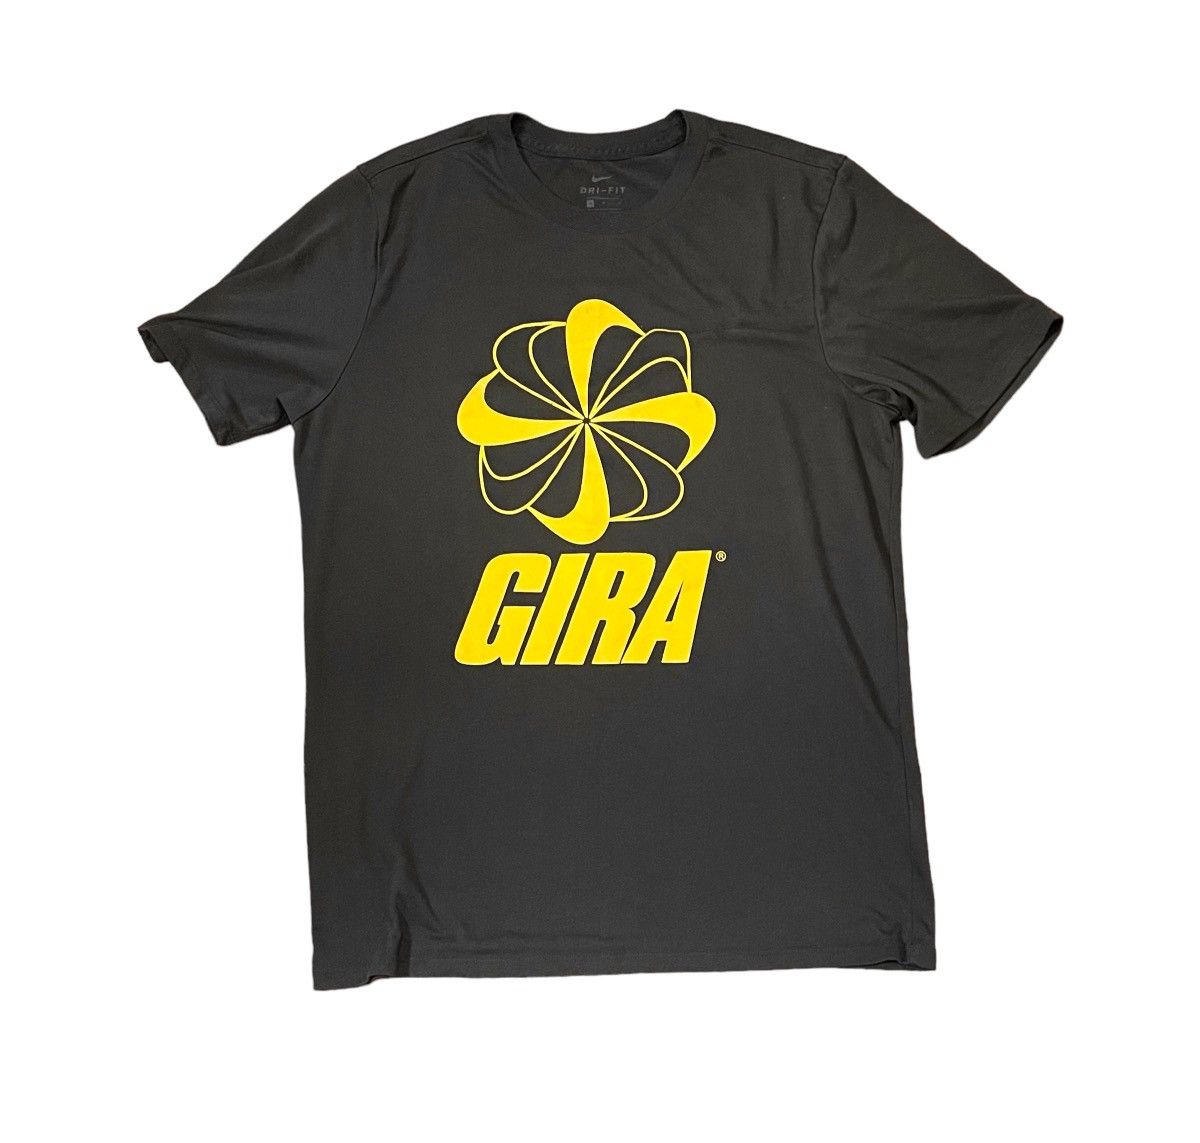 Undercover Nike gyakusou “GIRA” logo running tee | Grailed